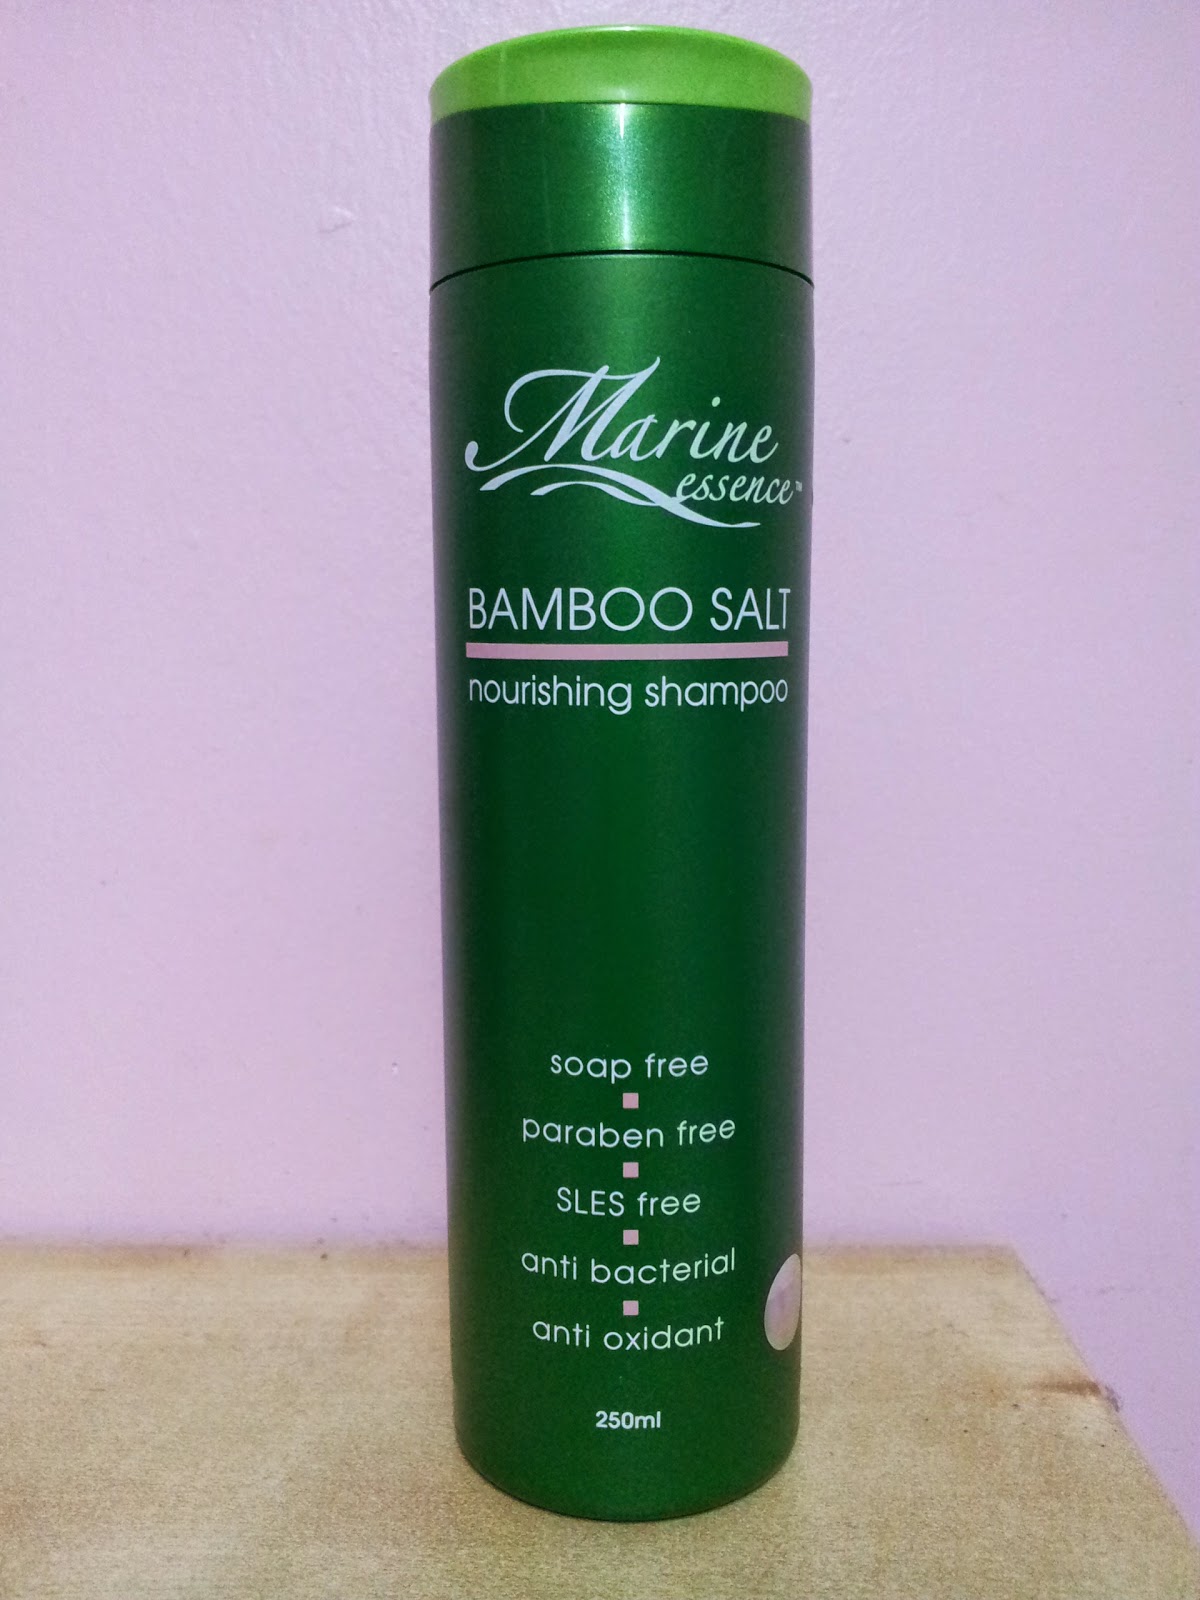 Marine Essence Bamboo Salt Hair Shampoo  reviews